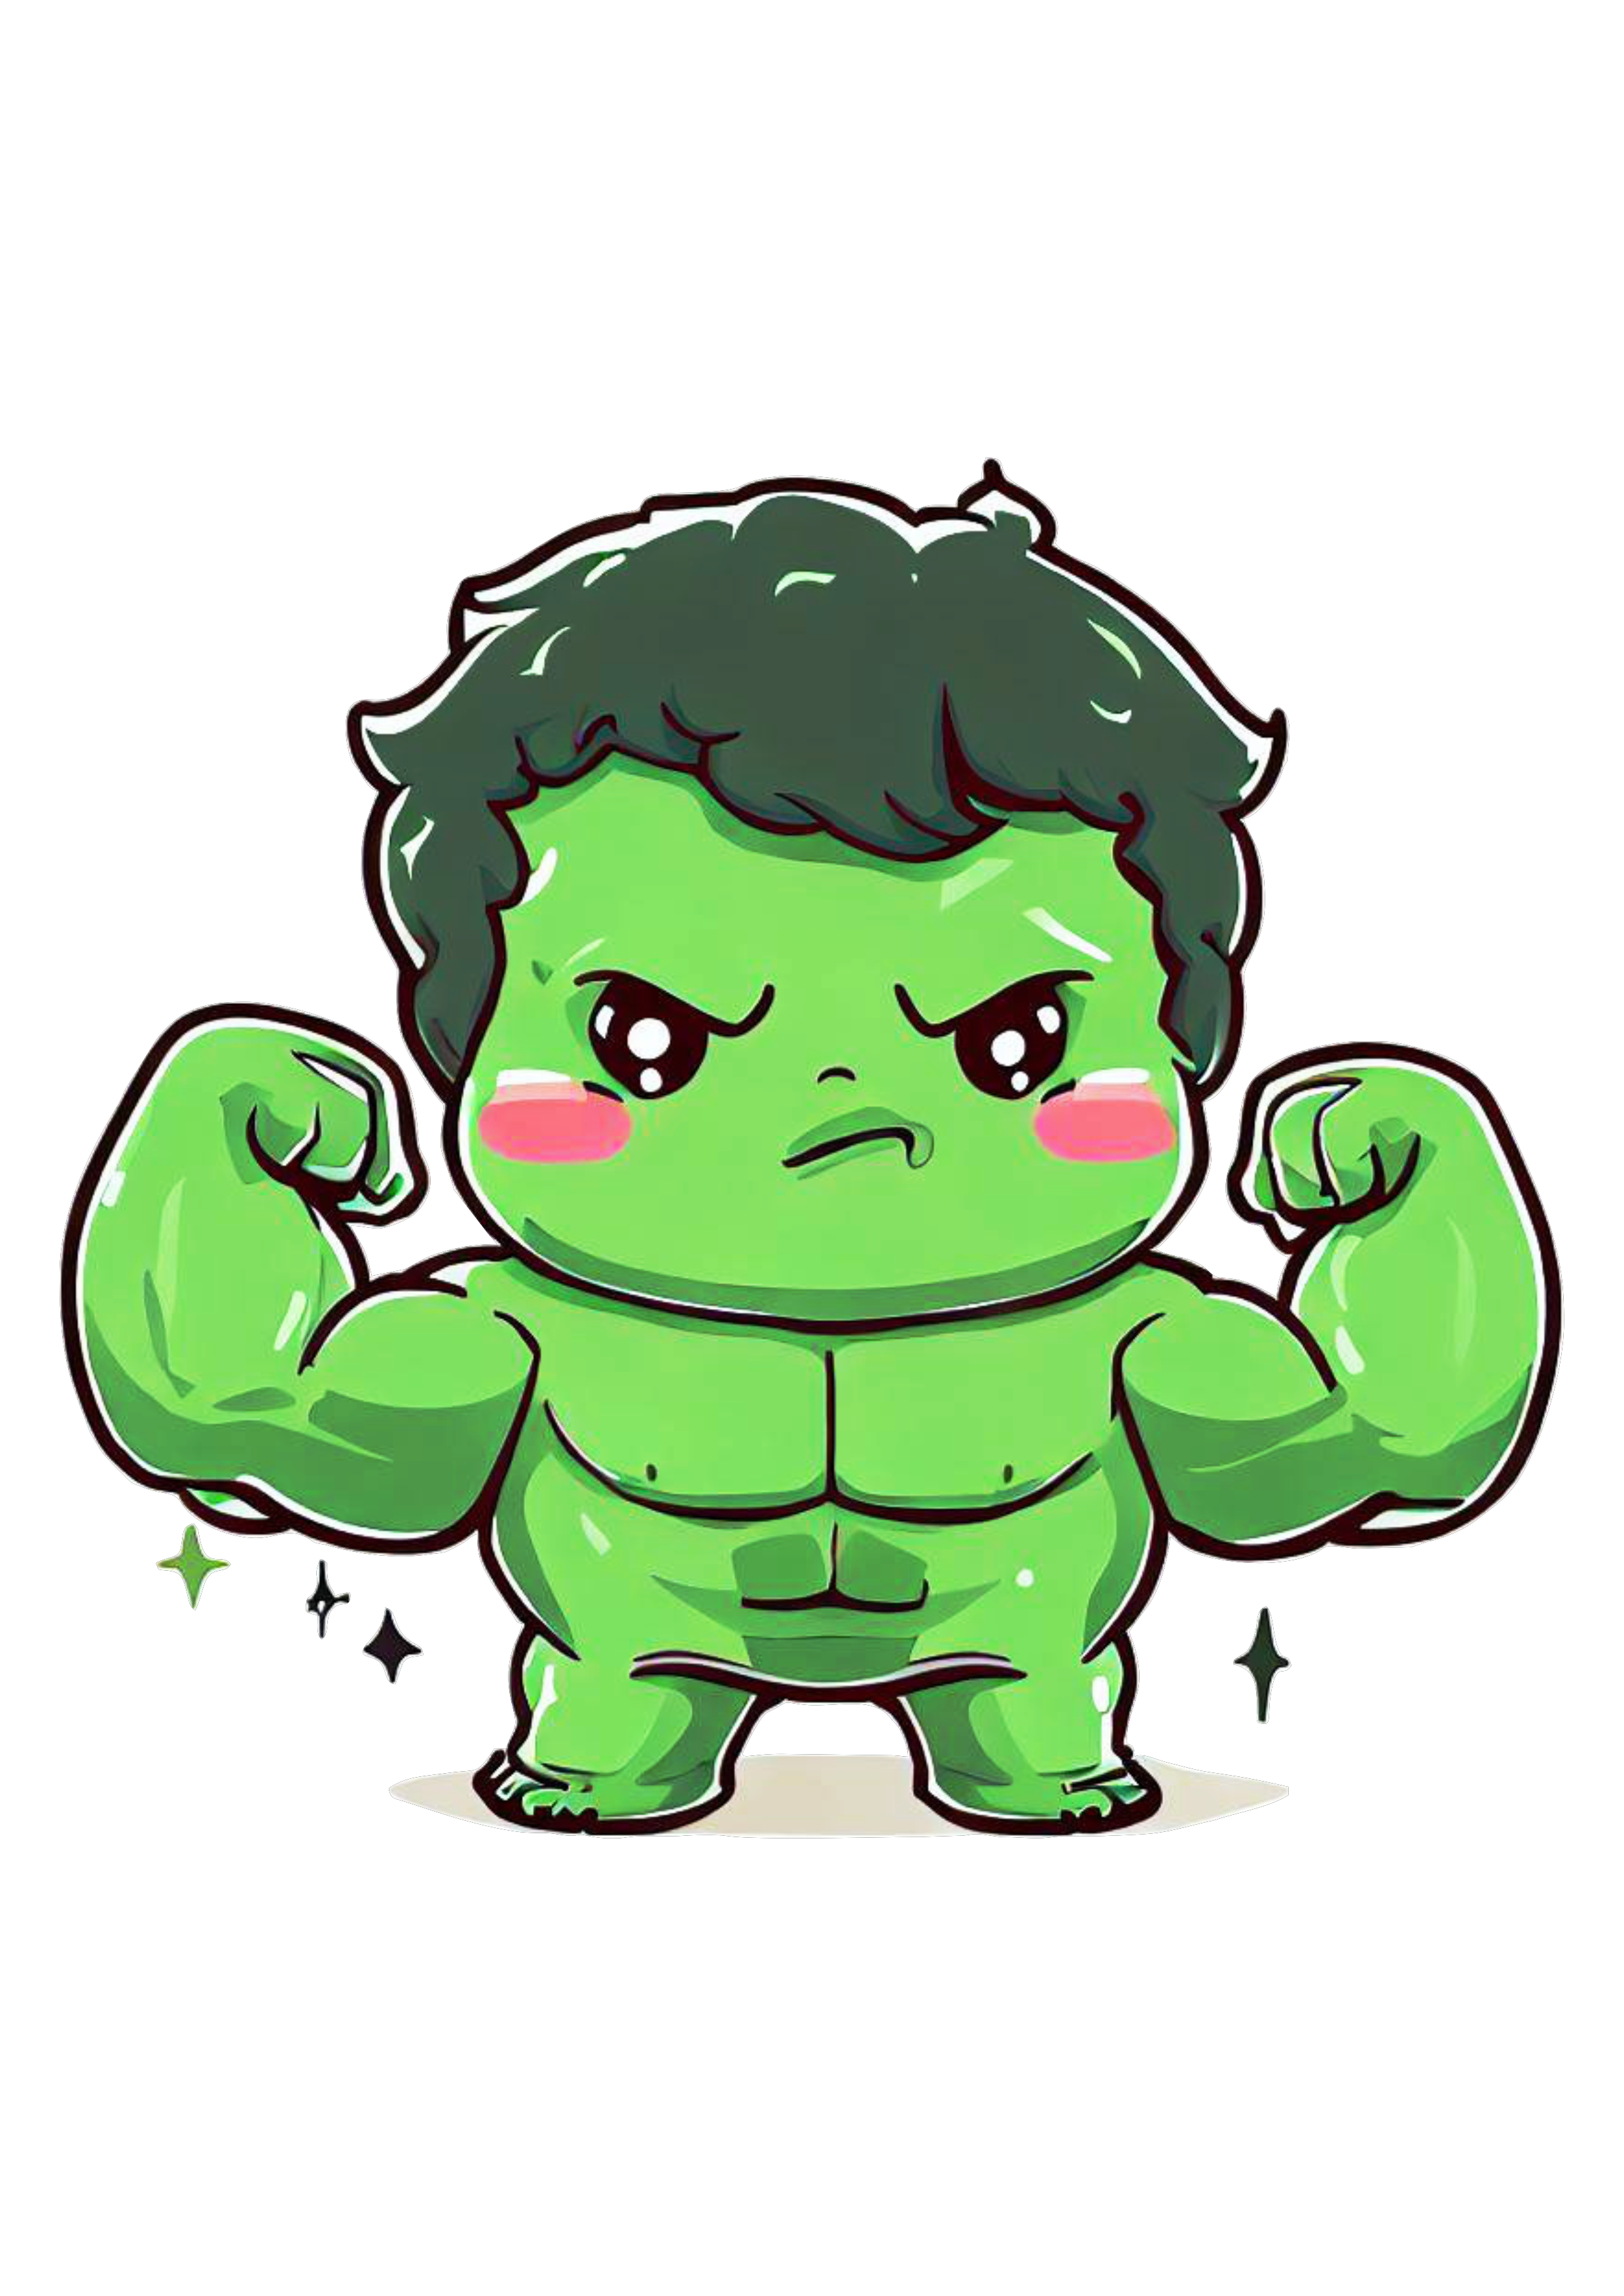 Incrível Hulk baby cute fofinho super heroi forte infantil bravo imagem sem fundo png